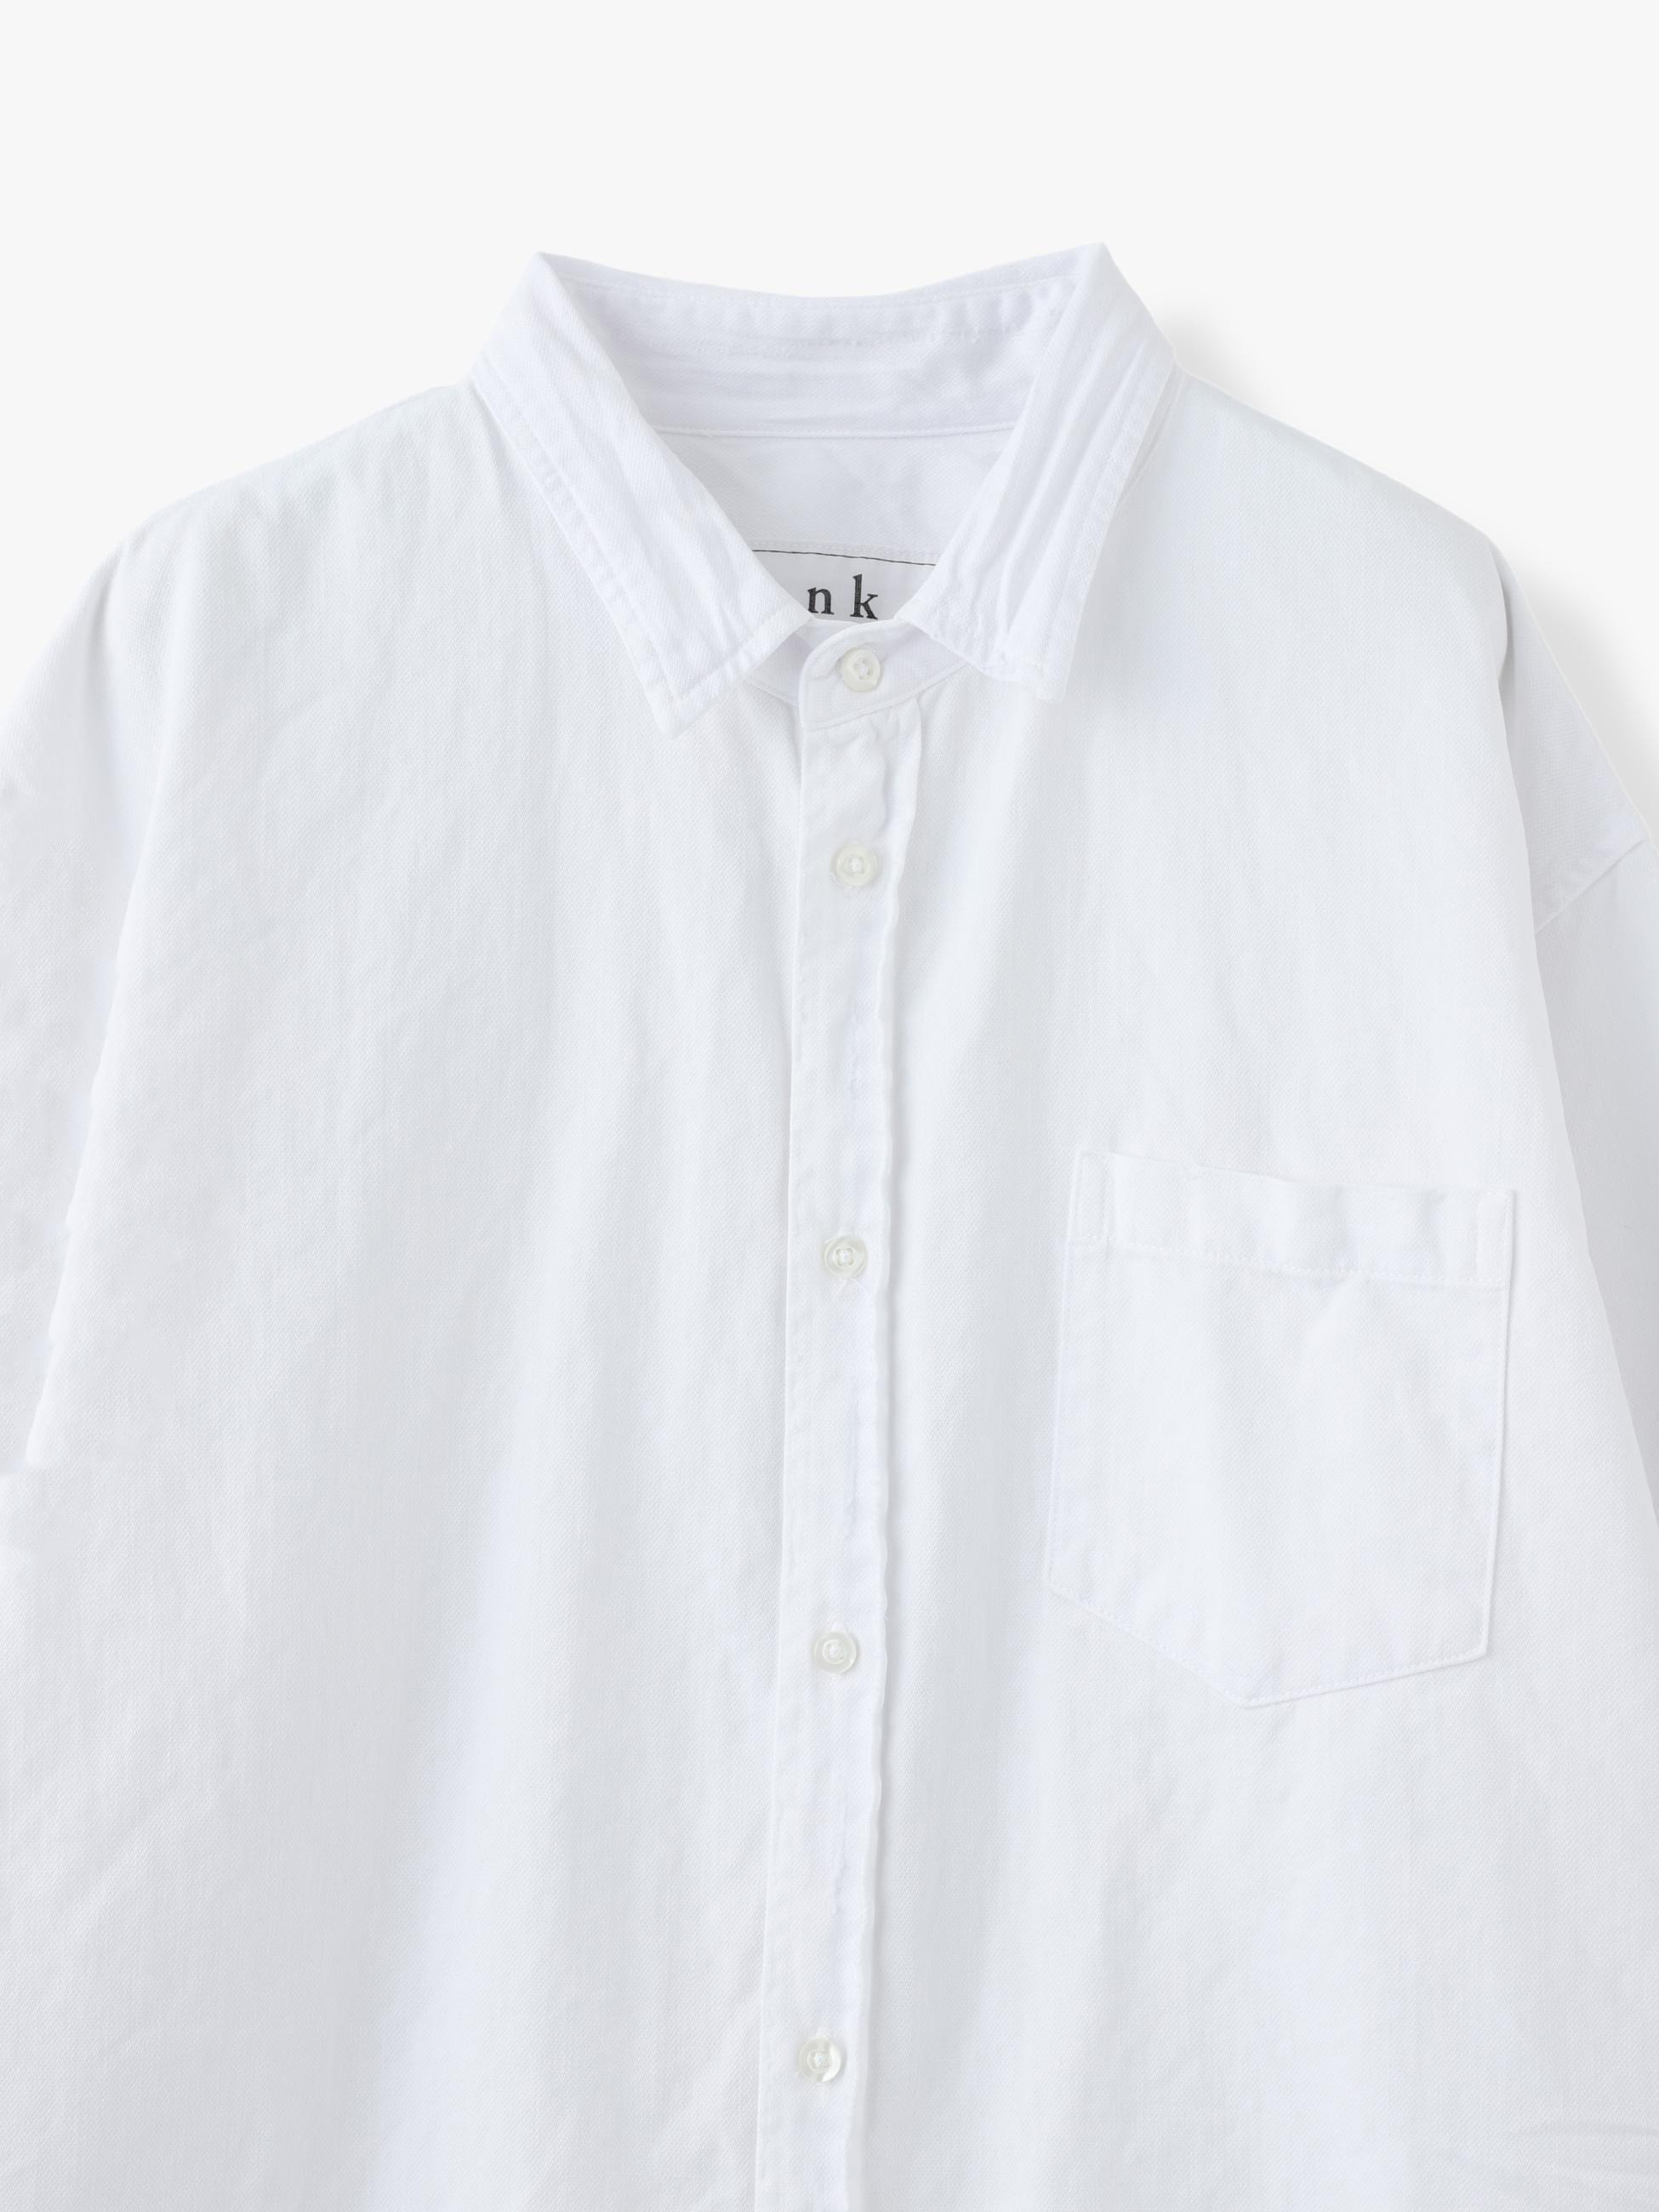 Luke Indigo Washed White Denim Shirt 詳細画像 white 2